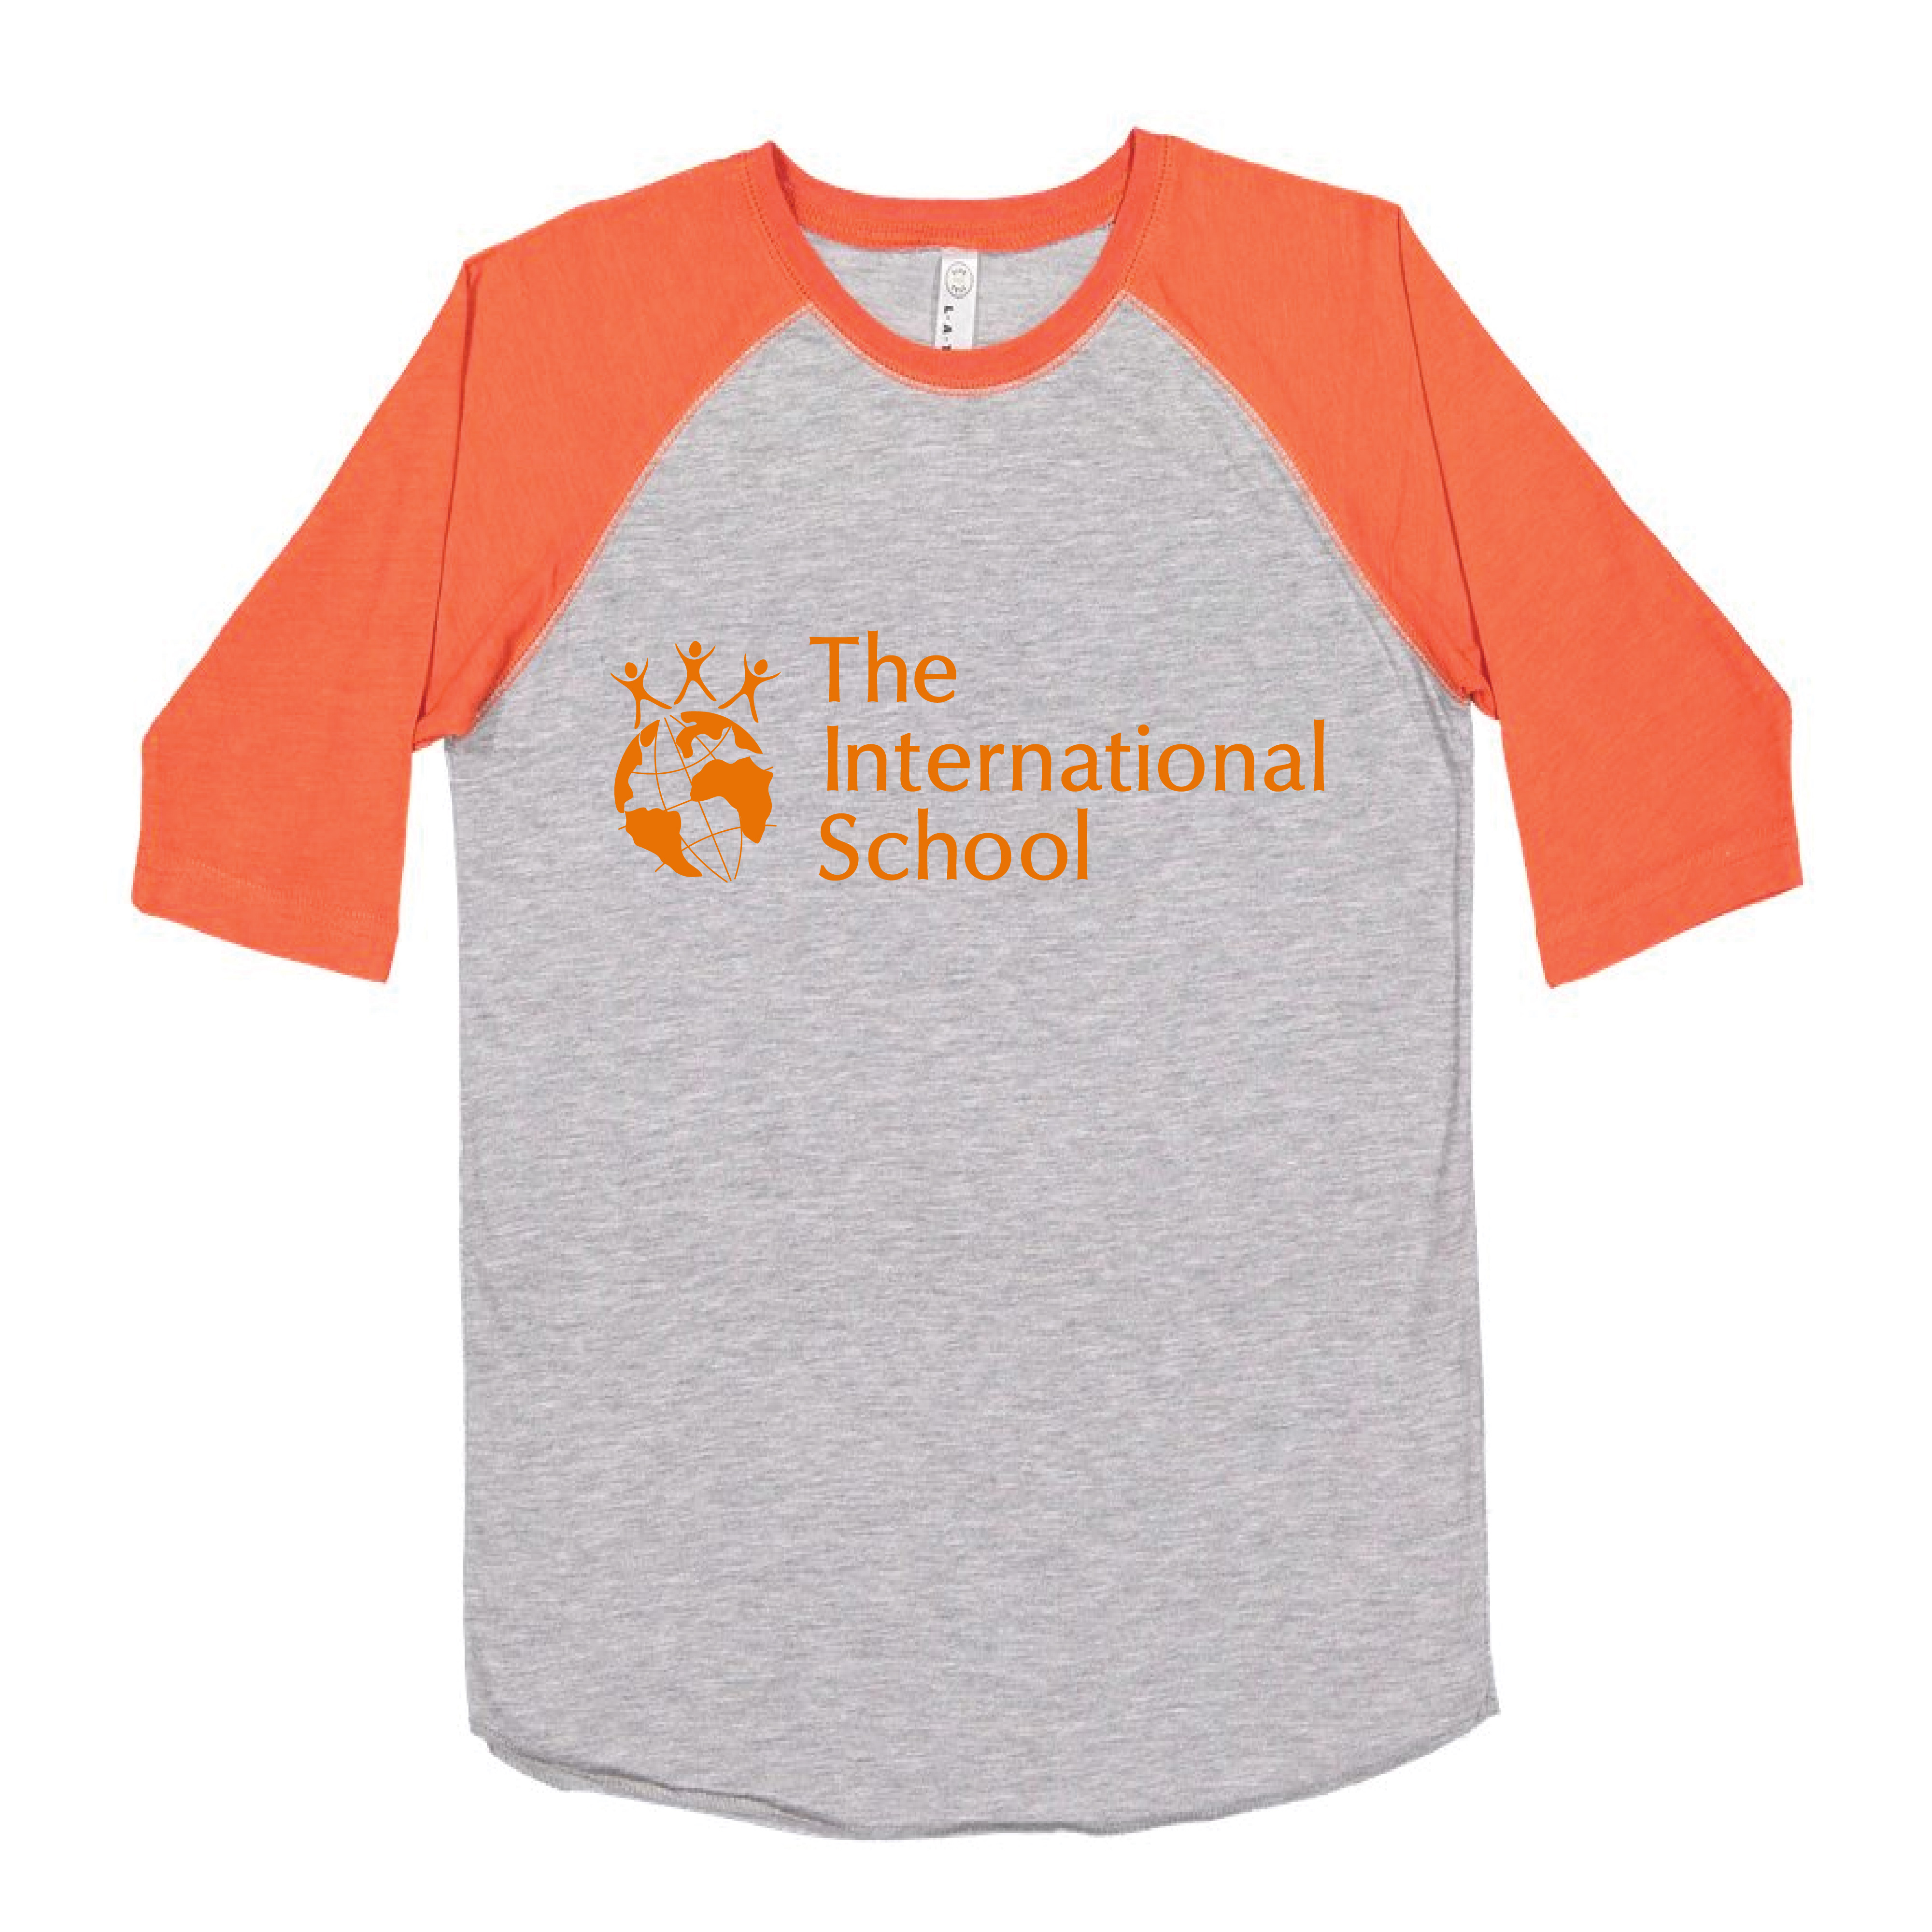 grey and orange baseball jersey